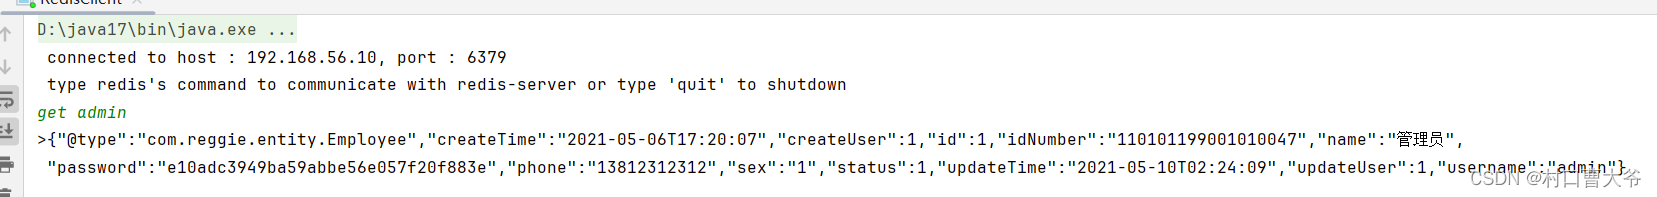 redis的基本命令，并用netty操作redis（不使用springboot或者spring框架）就单纯的用netty搞。